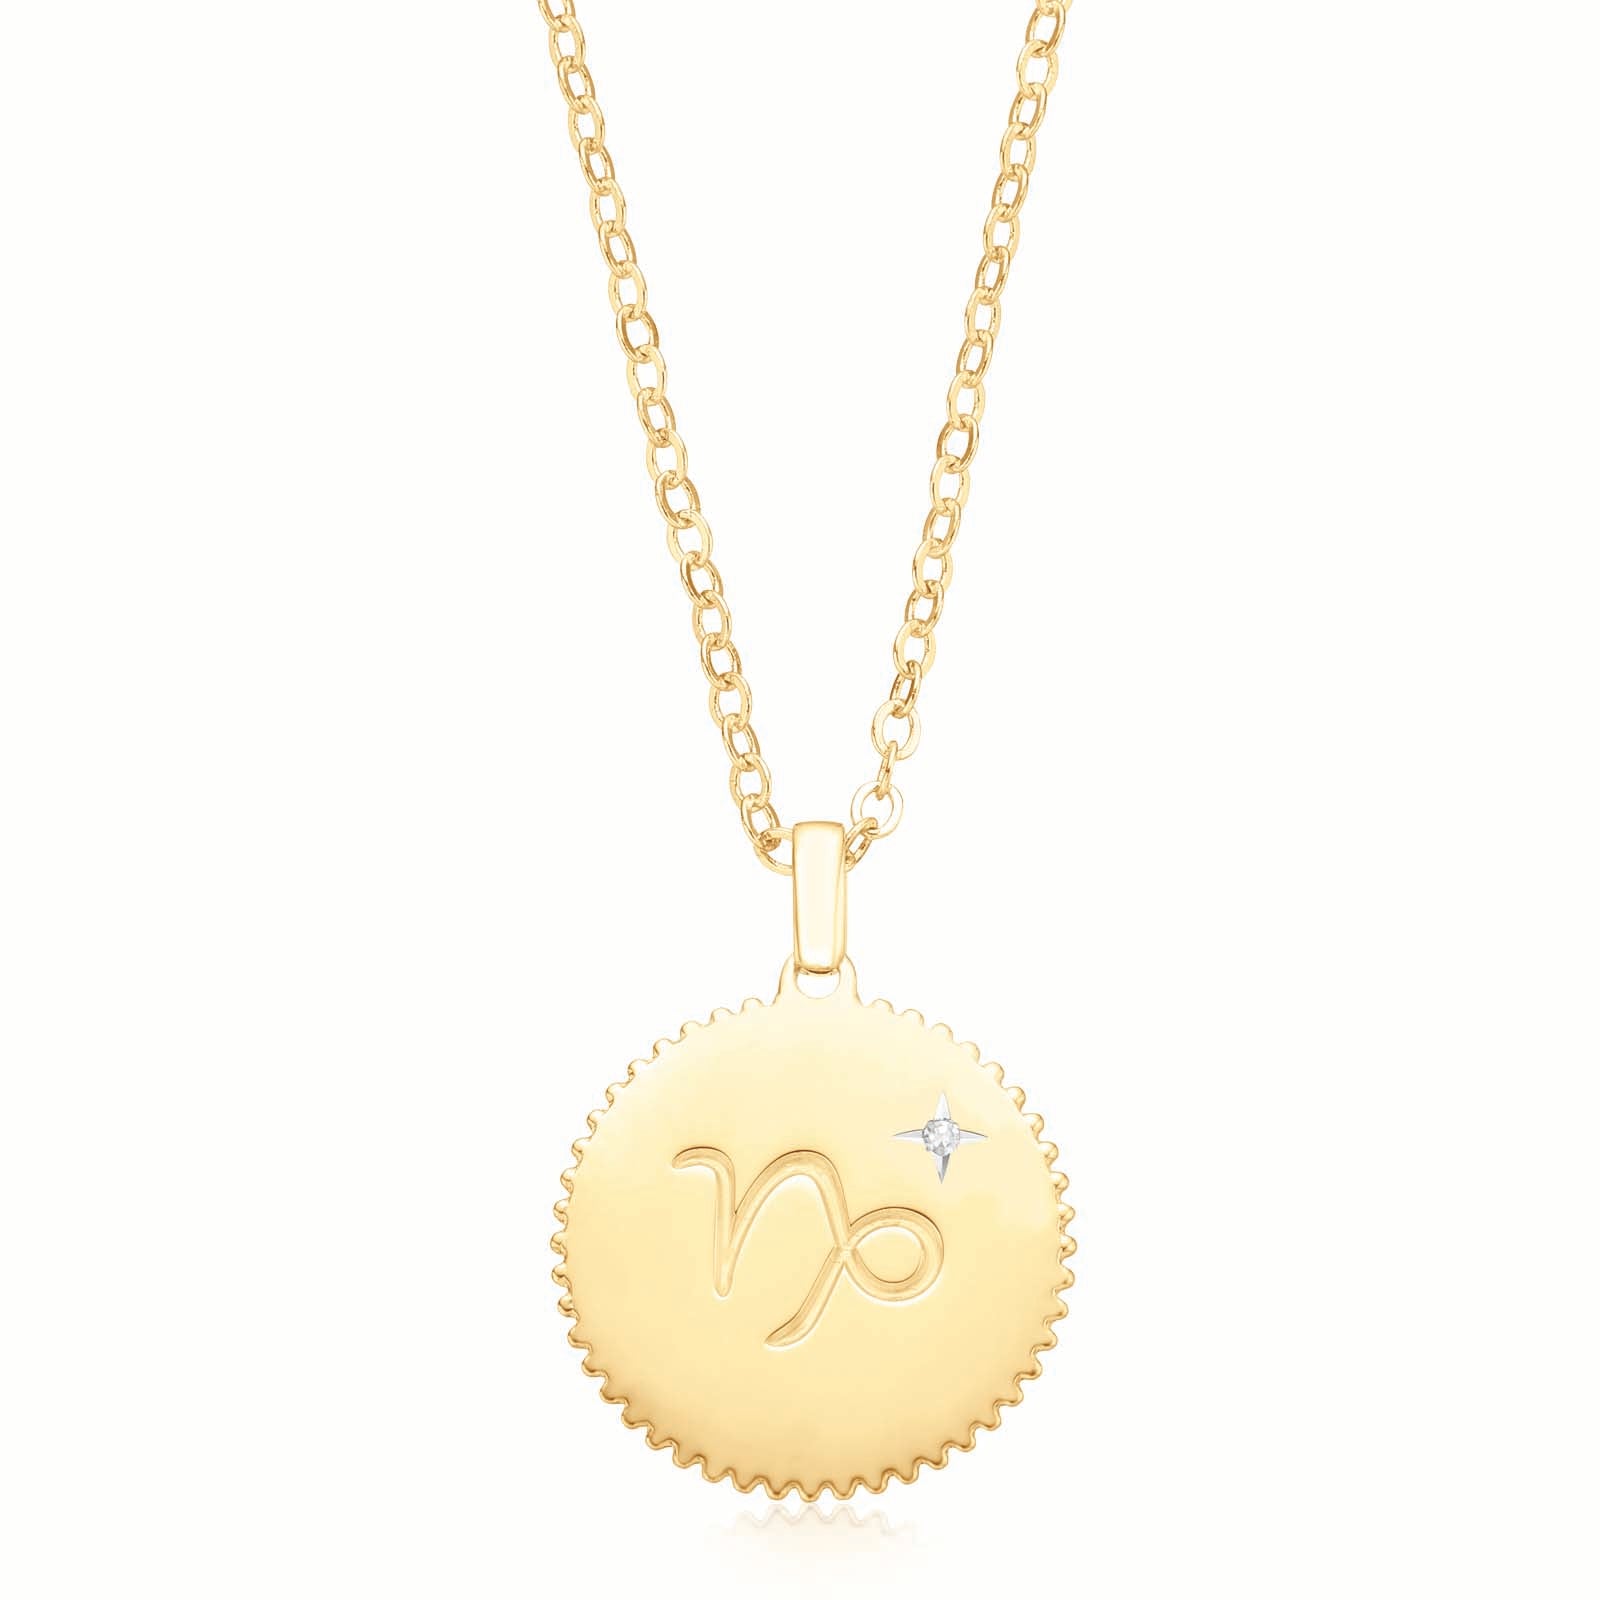 12 Constellation Star Day & Night Zodiac Sign Necklace Pendant Jewelry Gift  2Pcs - Deblu